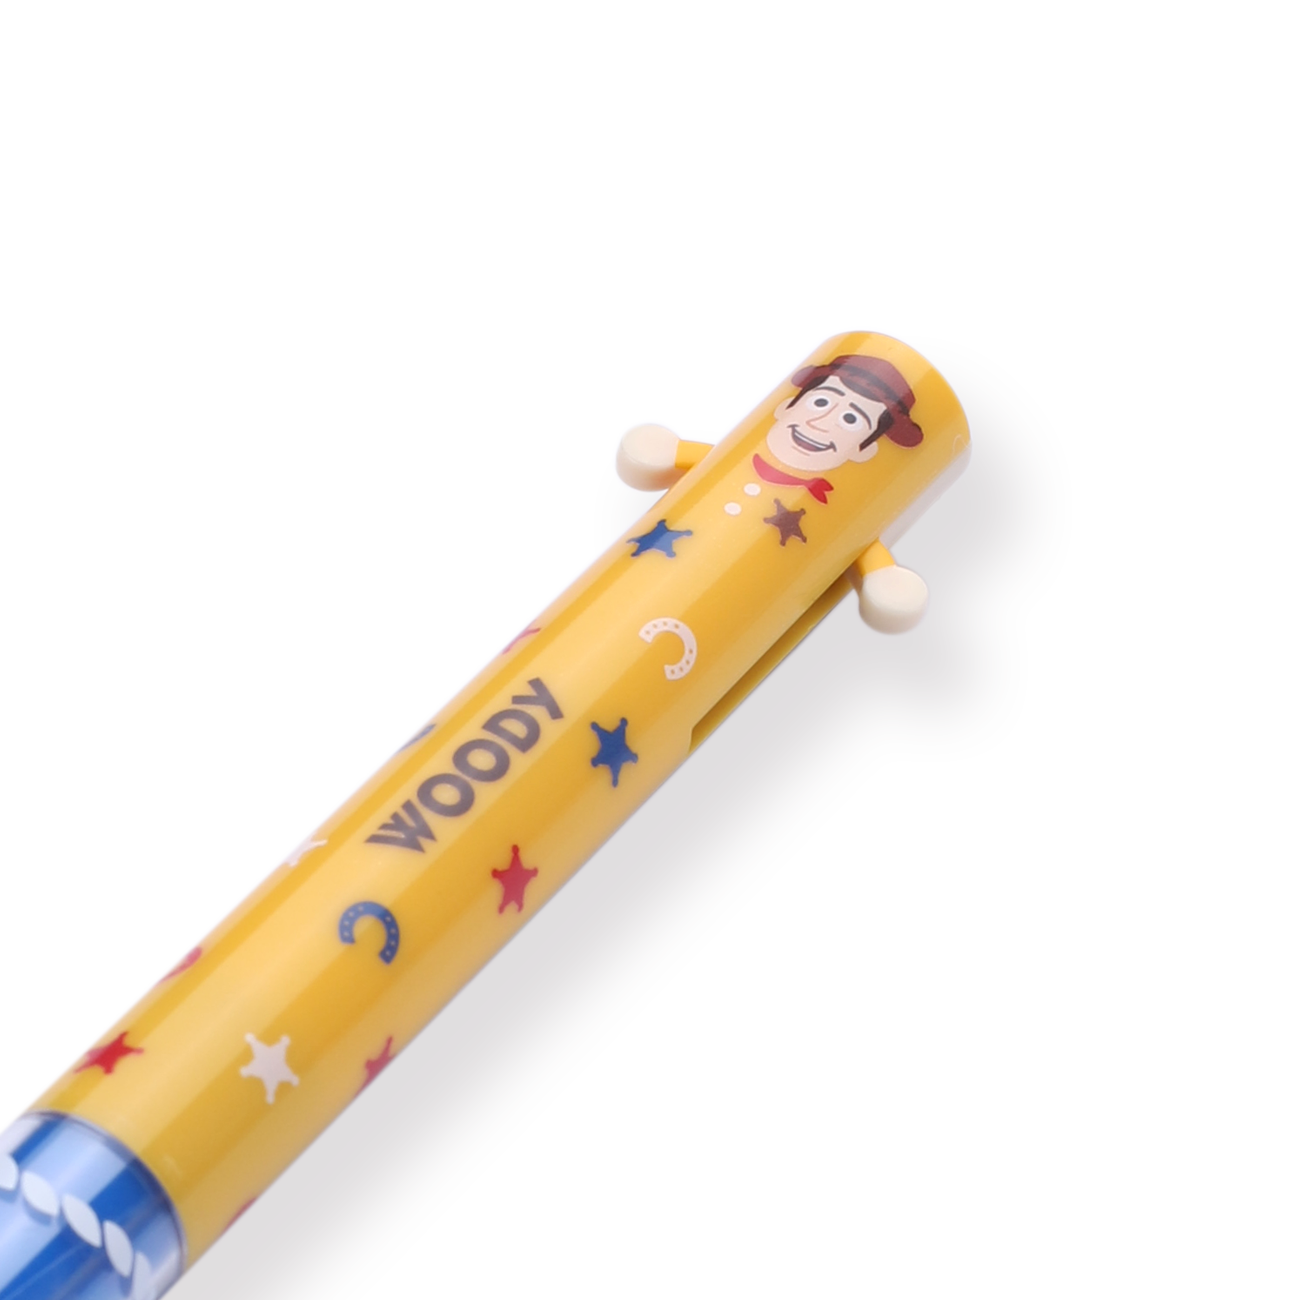 Sakamoto Toy Story Mimi Pen - 0.7 mm - Woody - Stationery Pal